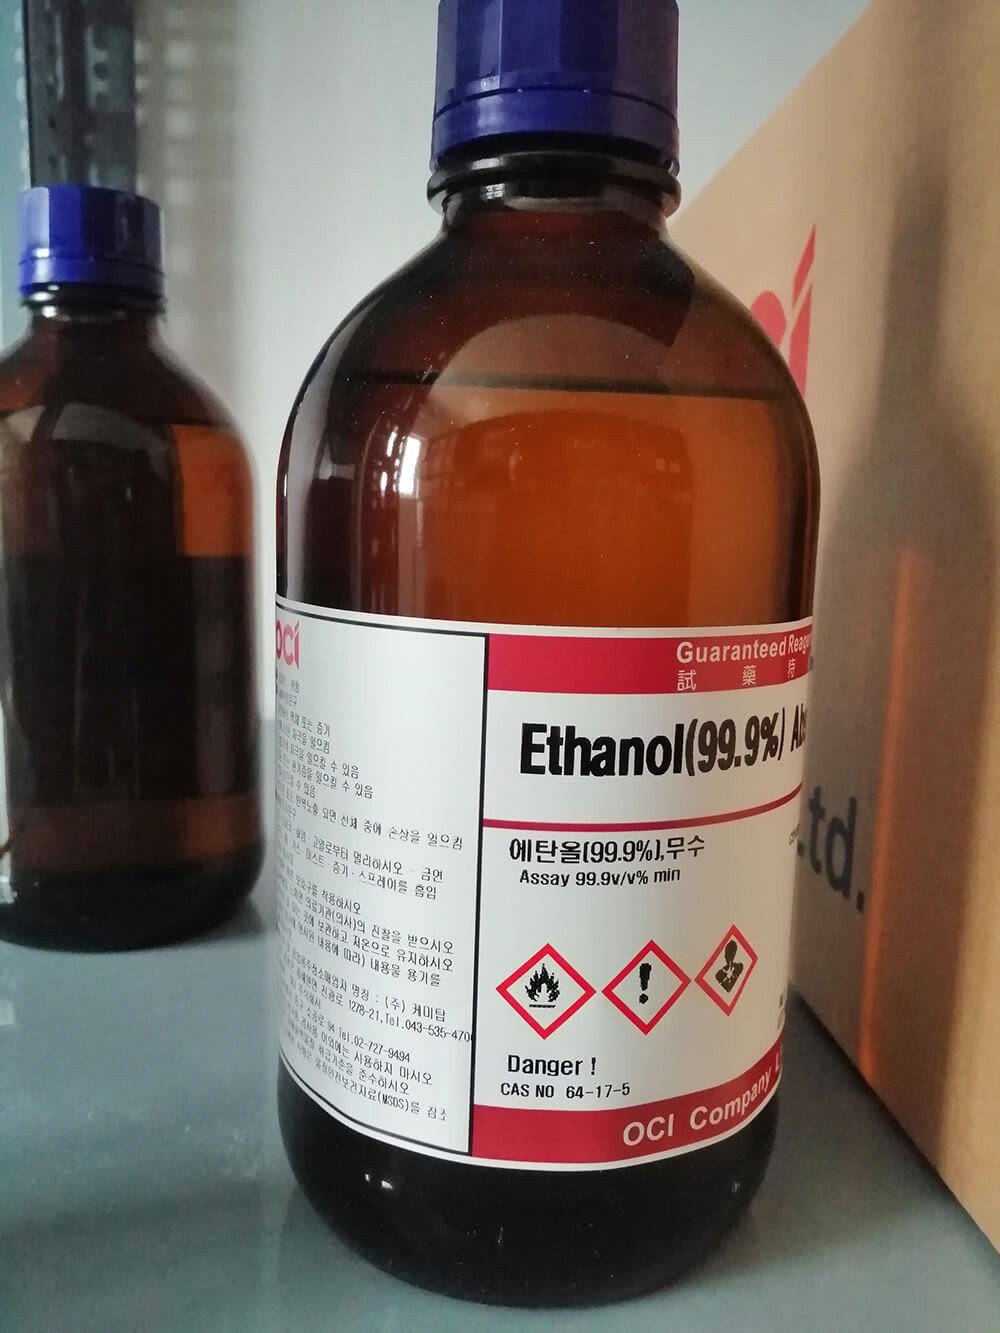 Ethanol 99.9% Absolute (1 litter), YoungJin